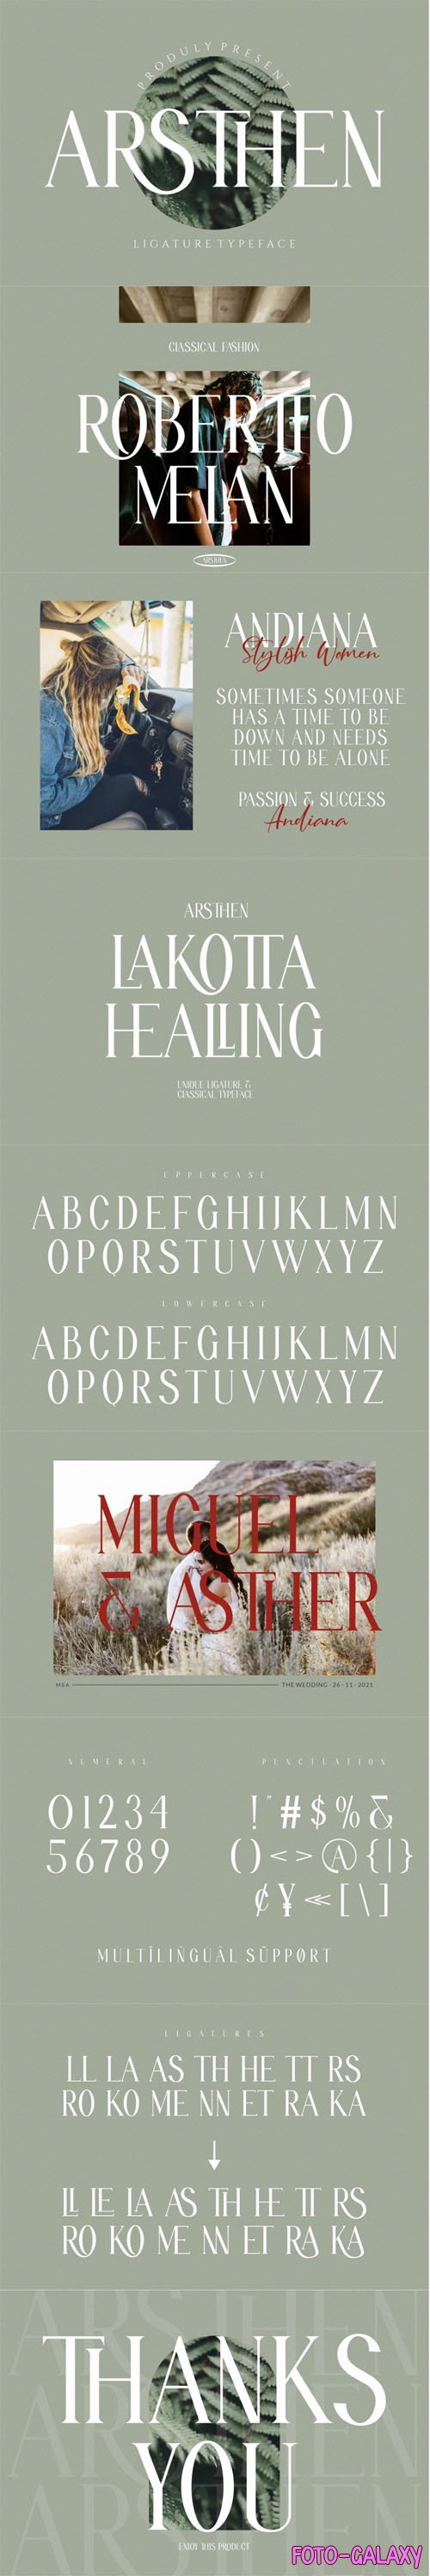 ARSTHEN - Ligature Serif Typeface